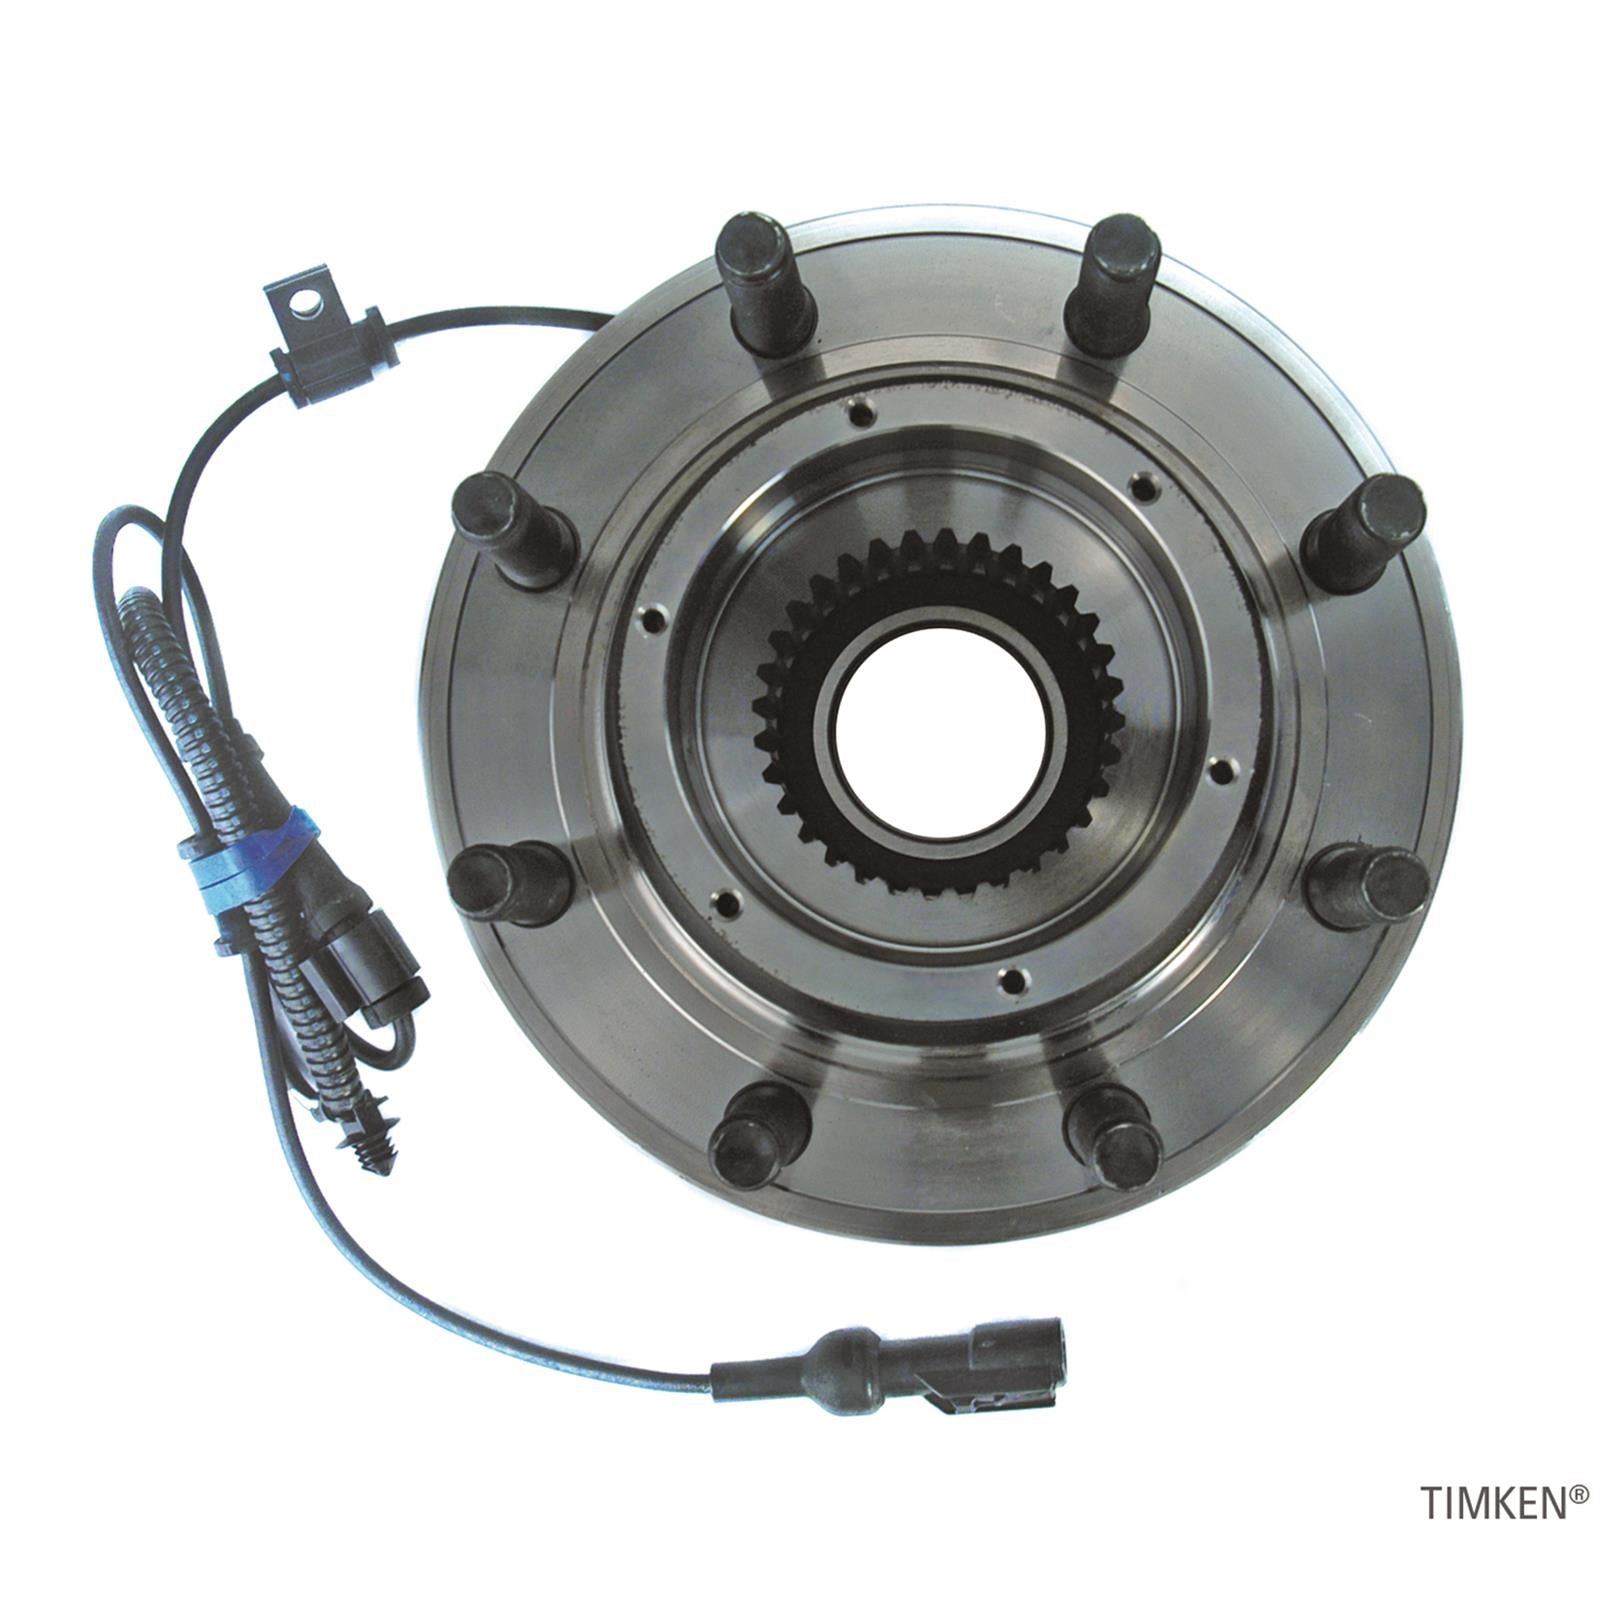 Fioroni 35mm Turbo Sliding Clutch Universal Flywheel + Nut [FIO-OT-FR50] -  HobbyTown